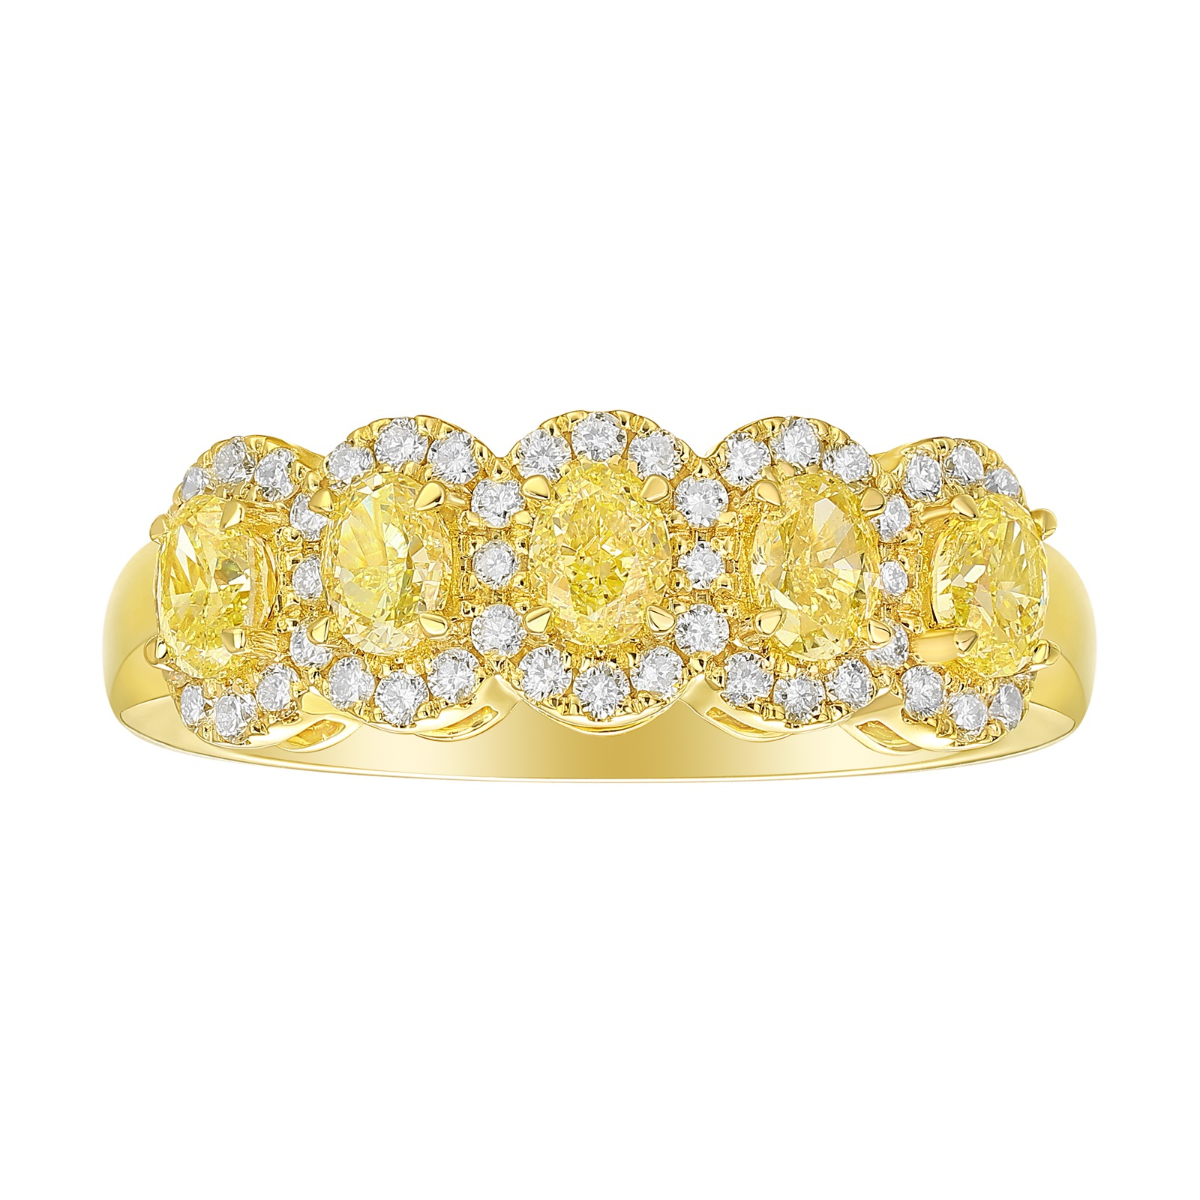 R37130NYL – 18K Yellow Gold Diamond Ring, 1.25 TCW